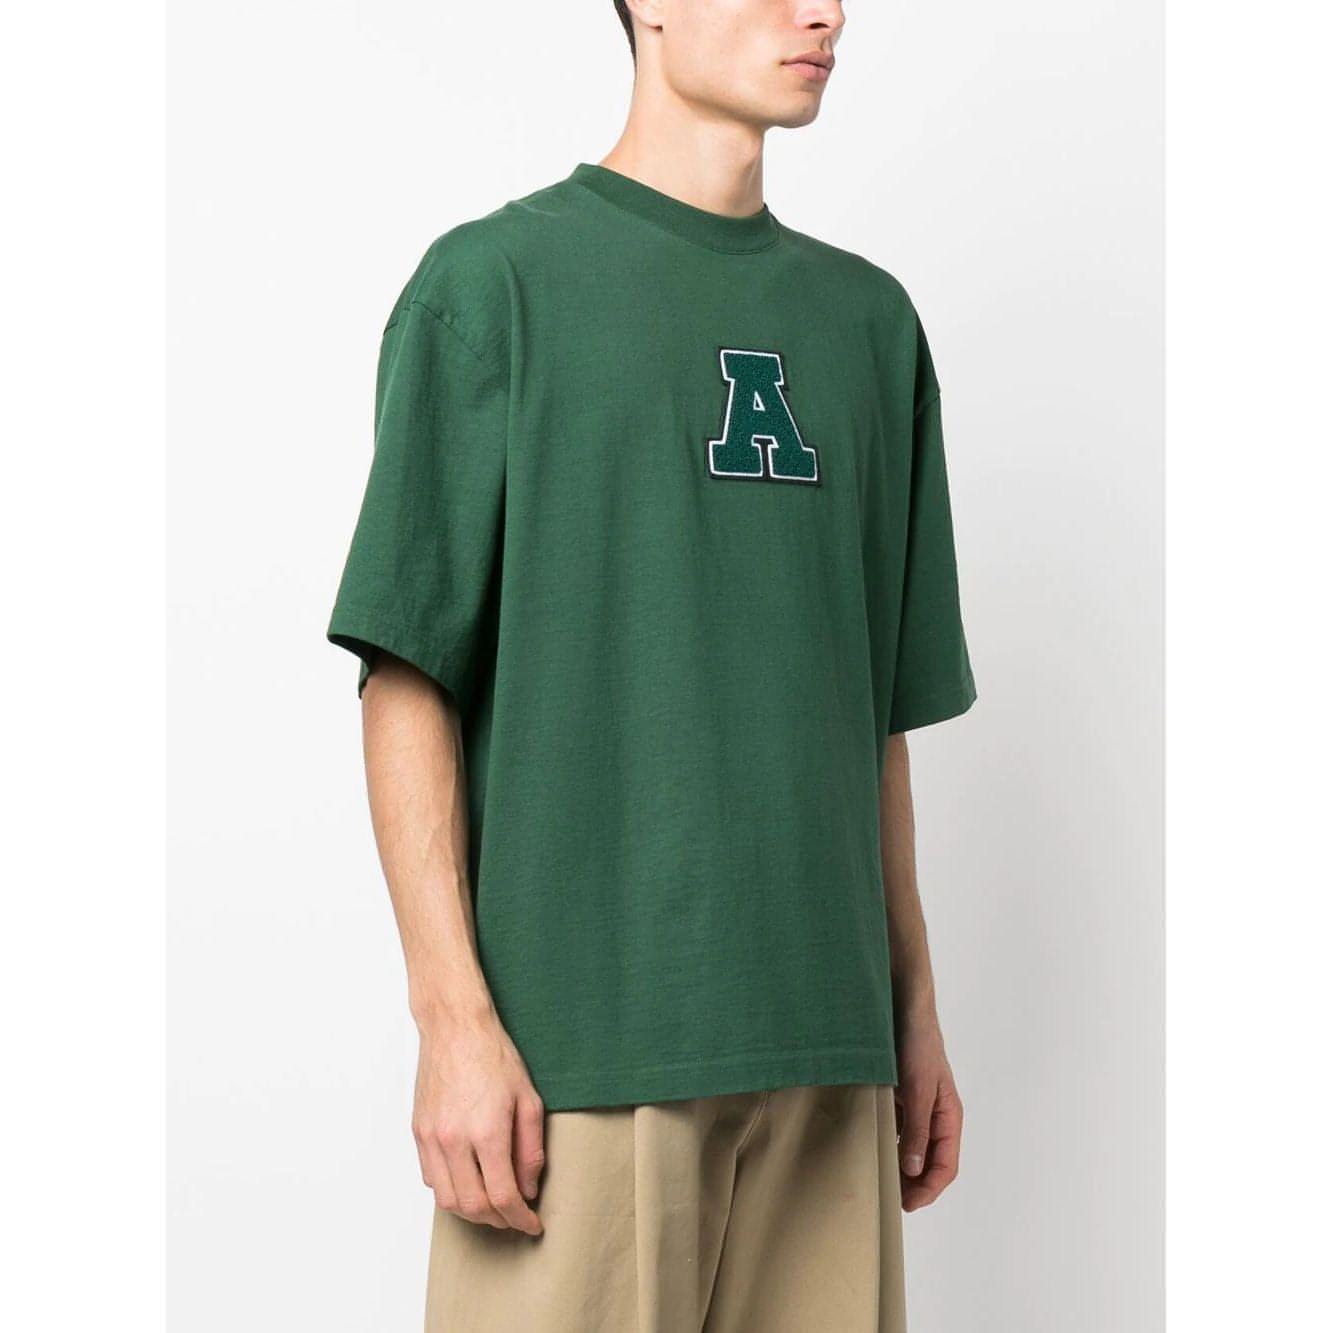 AXEL ARIGATO vyriški žali marškinėliai College A T-Shirt